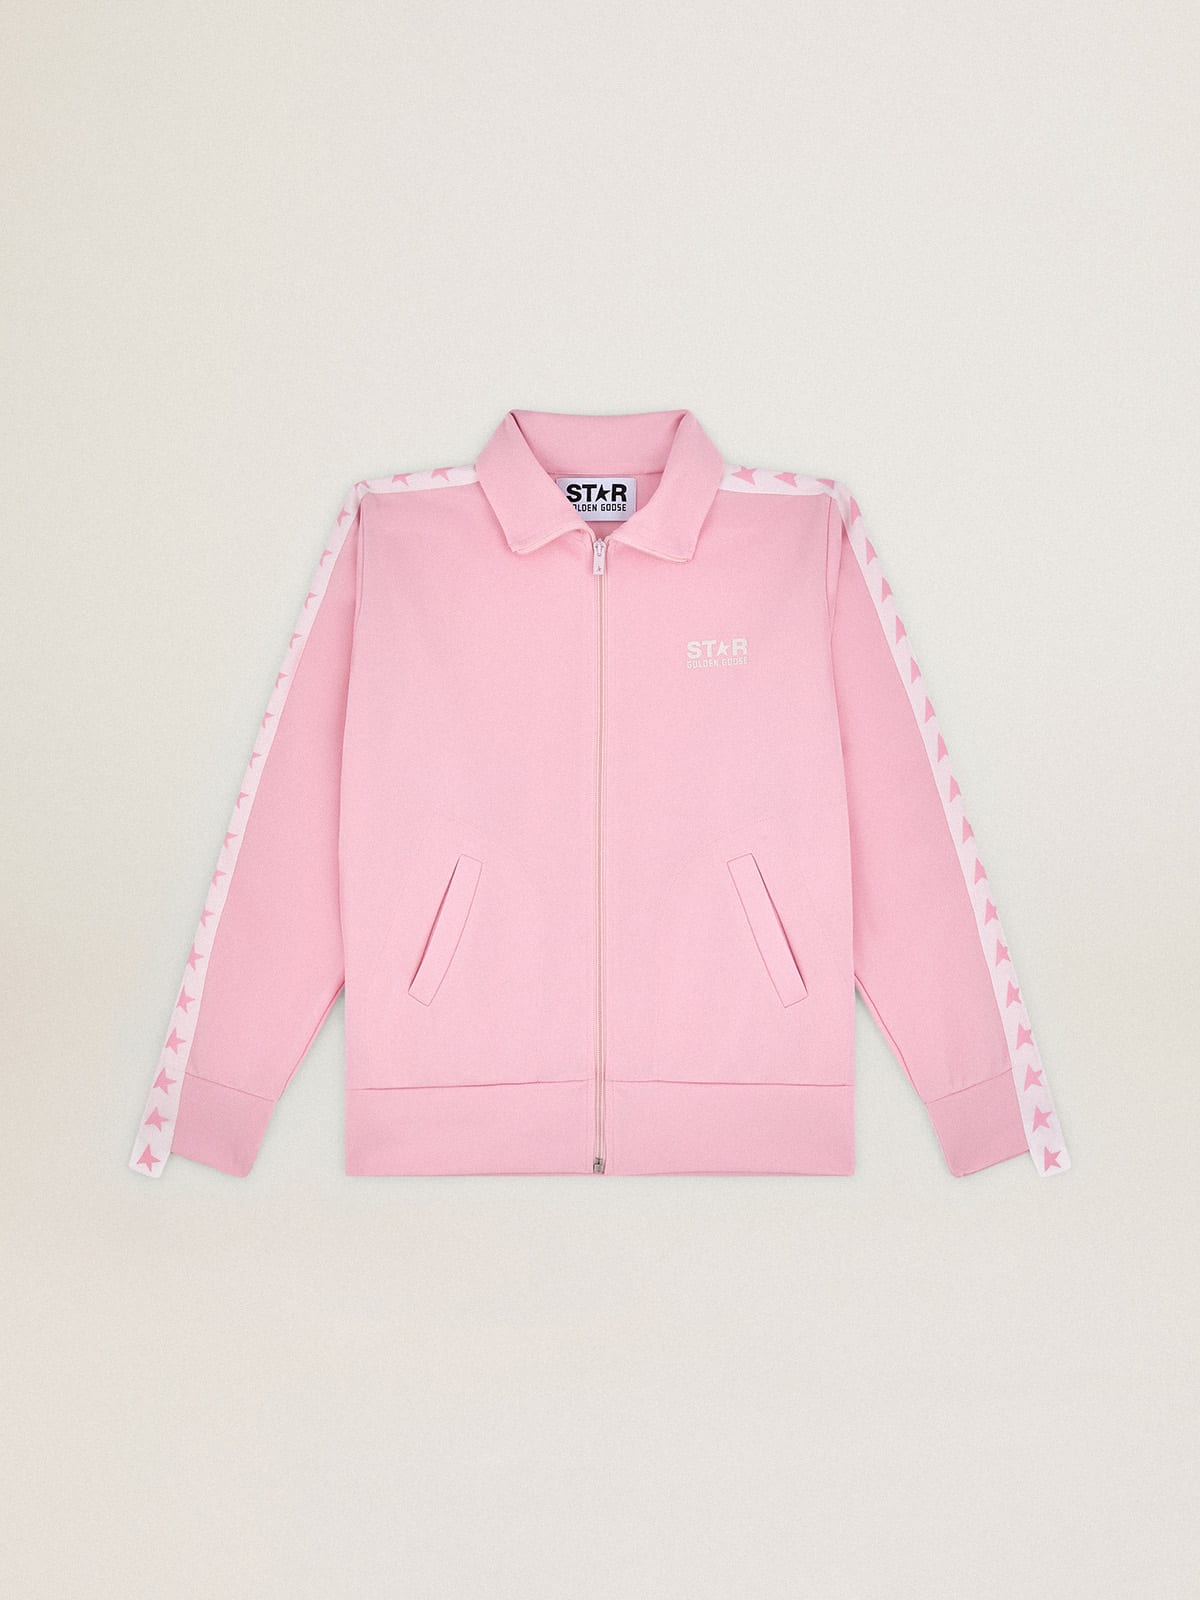 Women's pink zipped sweatshirt with contrasting pink stars